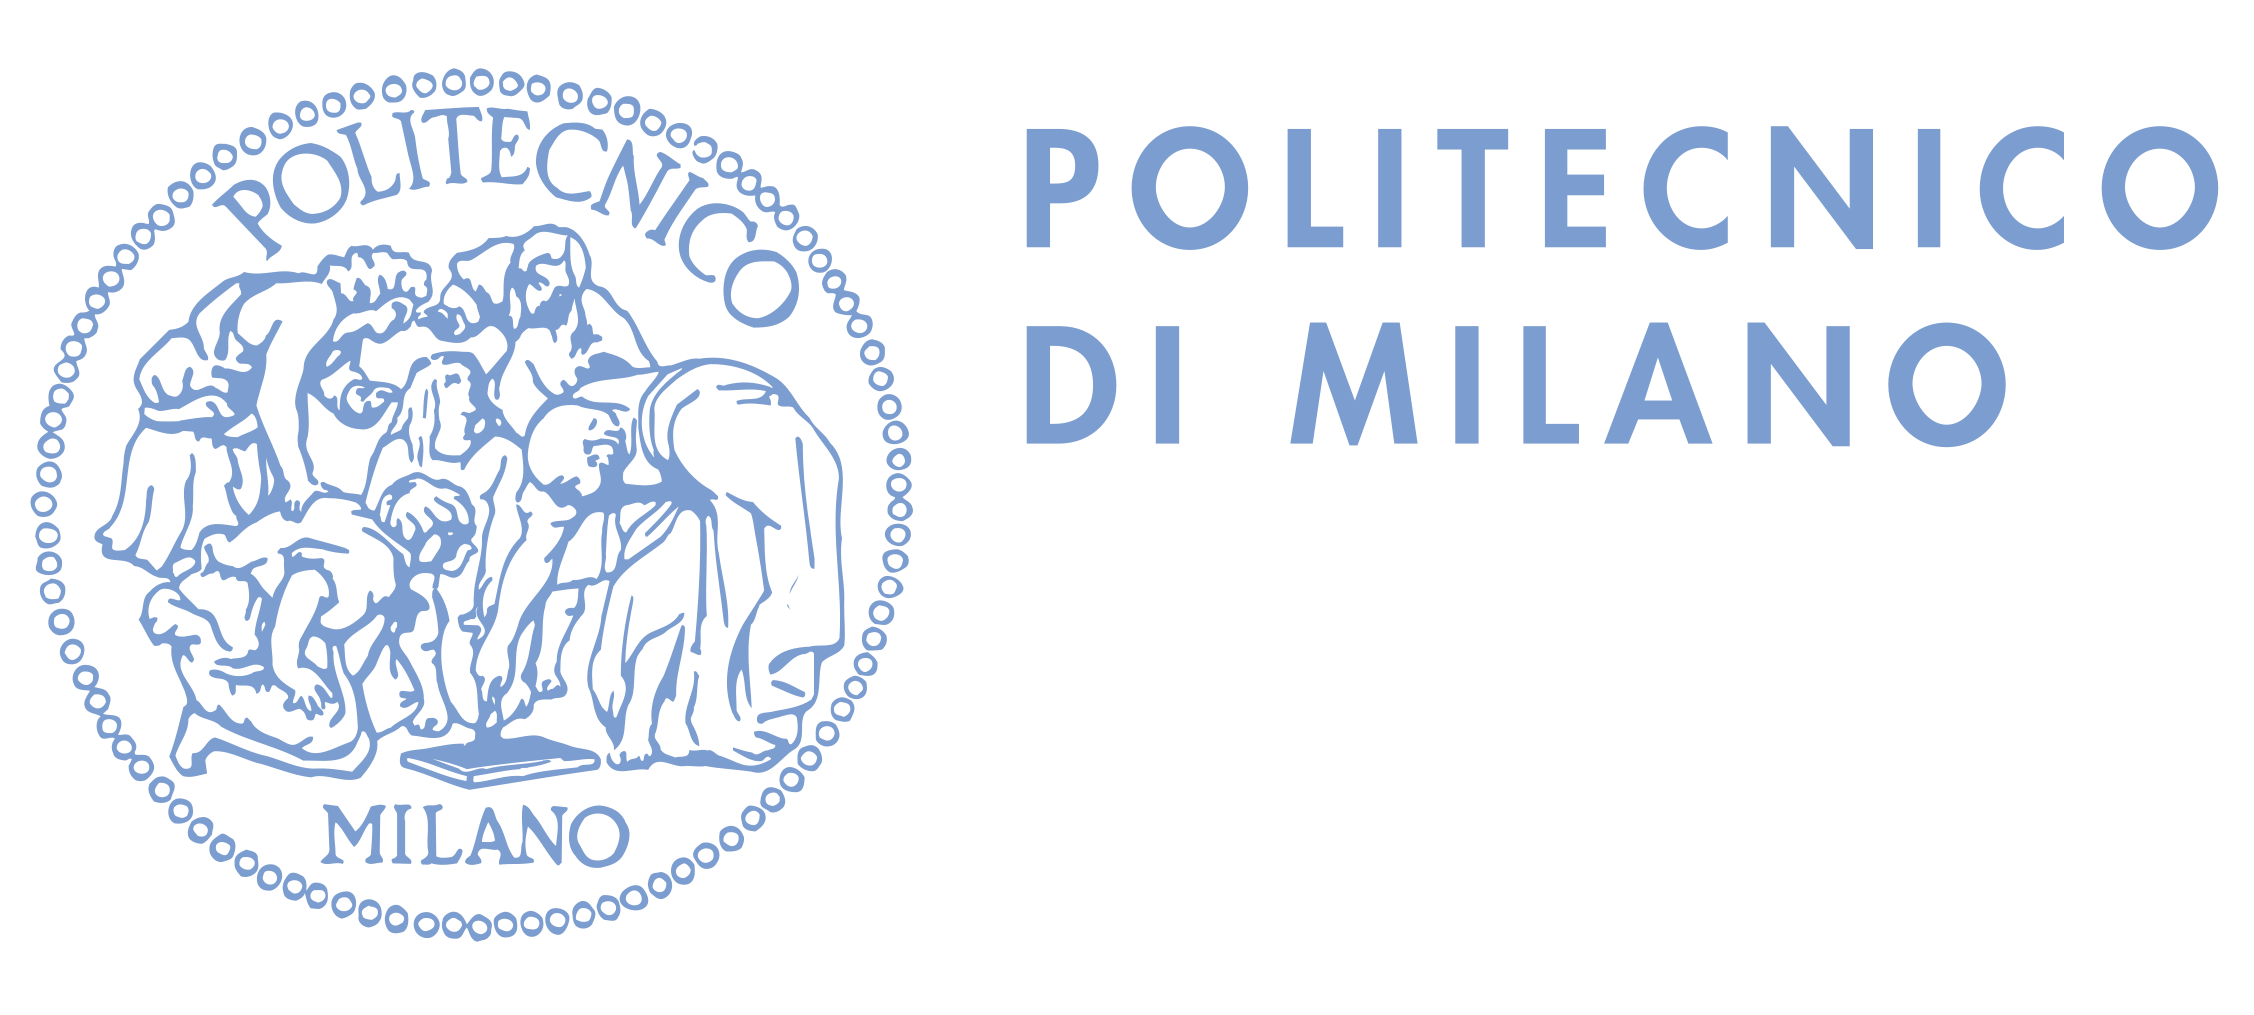 politecnico-di-milano-logo-png-transparent.png